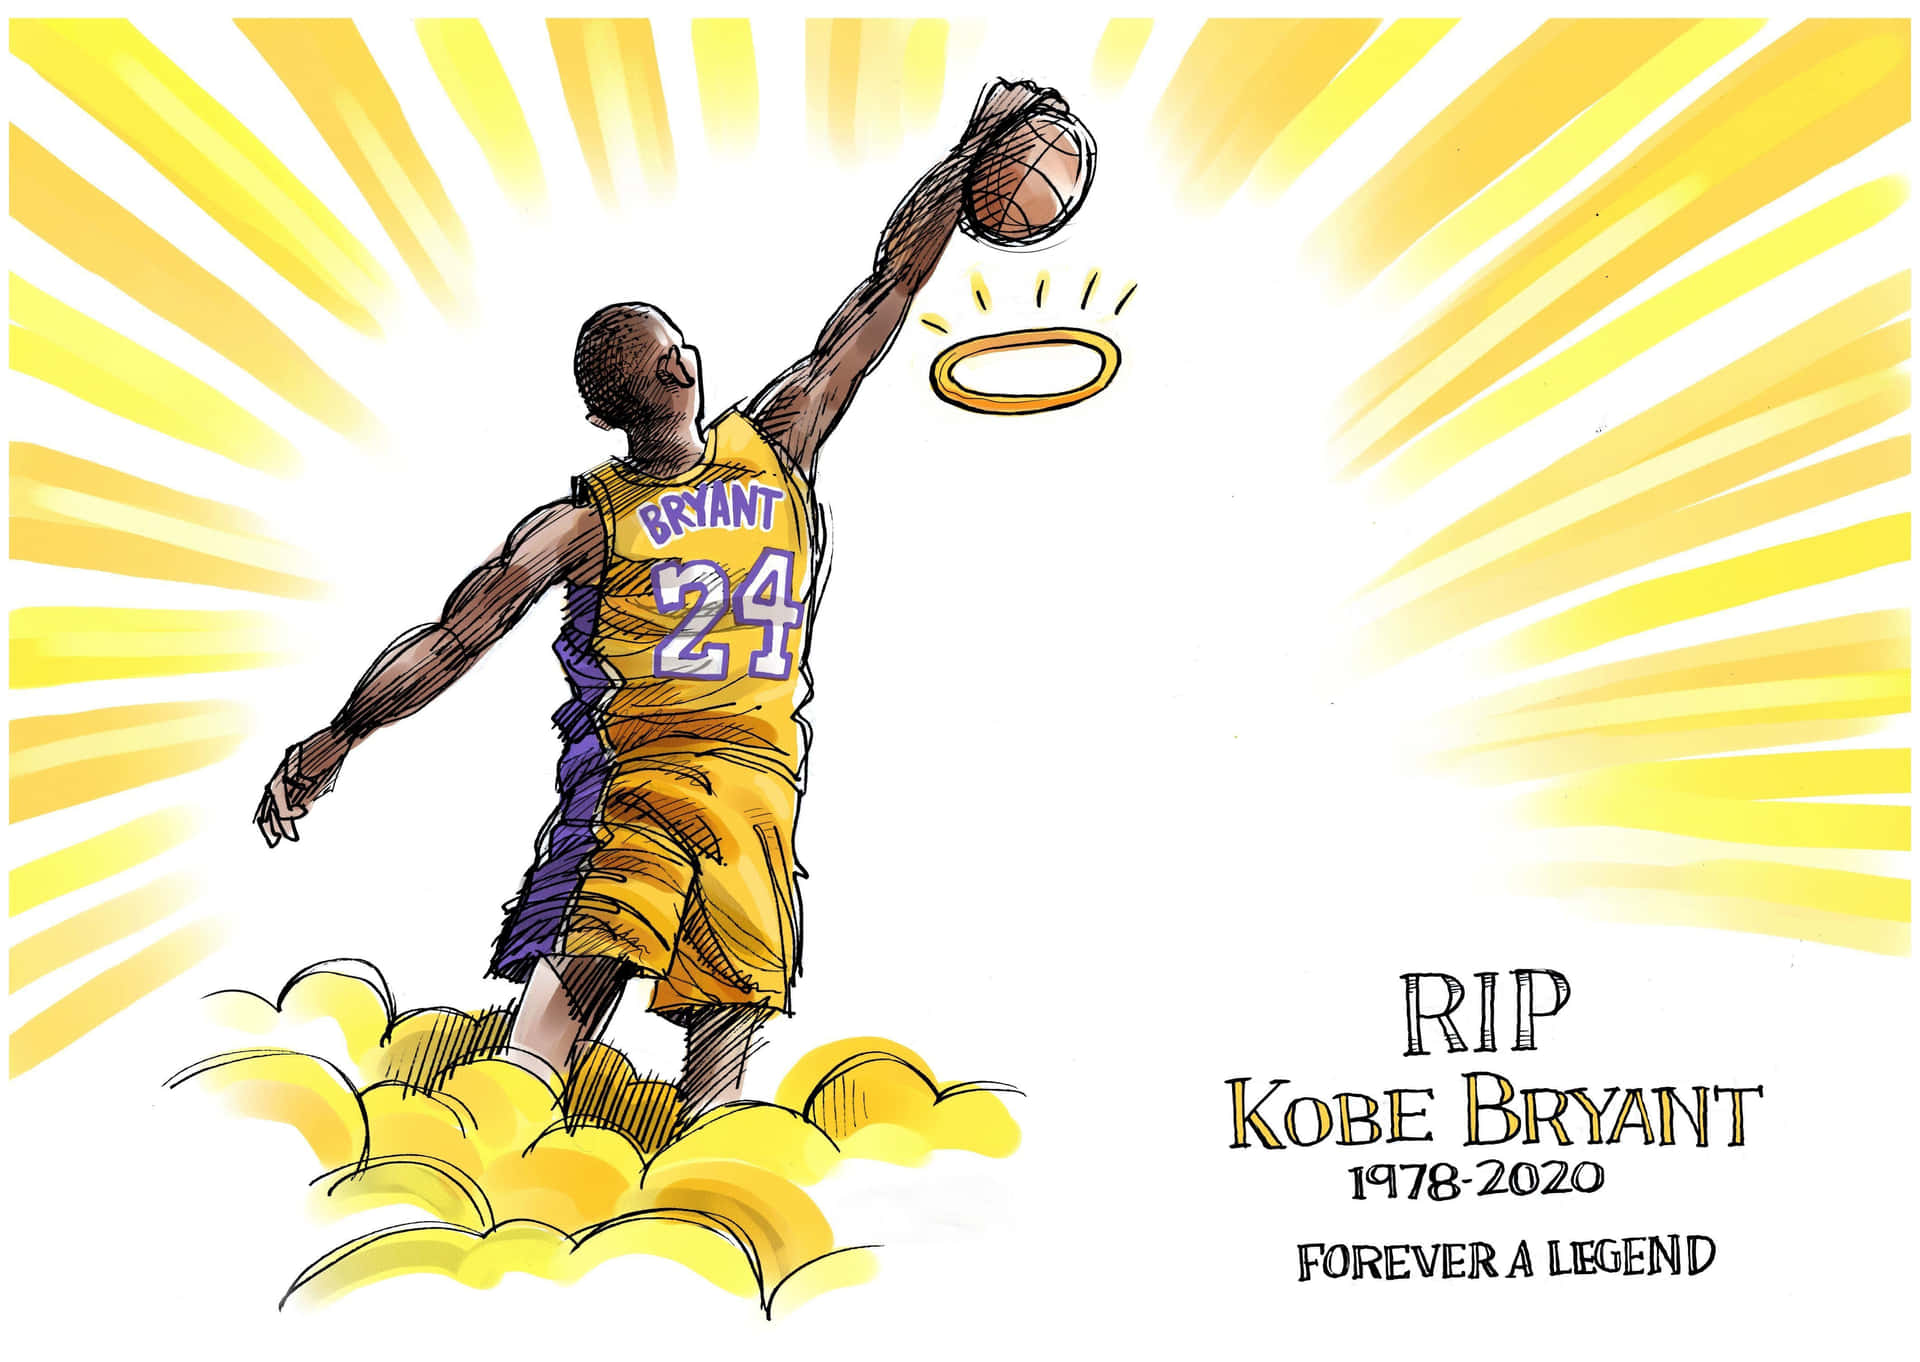 A smiling cartoon image of the legendary Kobe Bryant Wallpaper